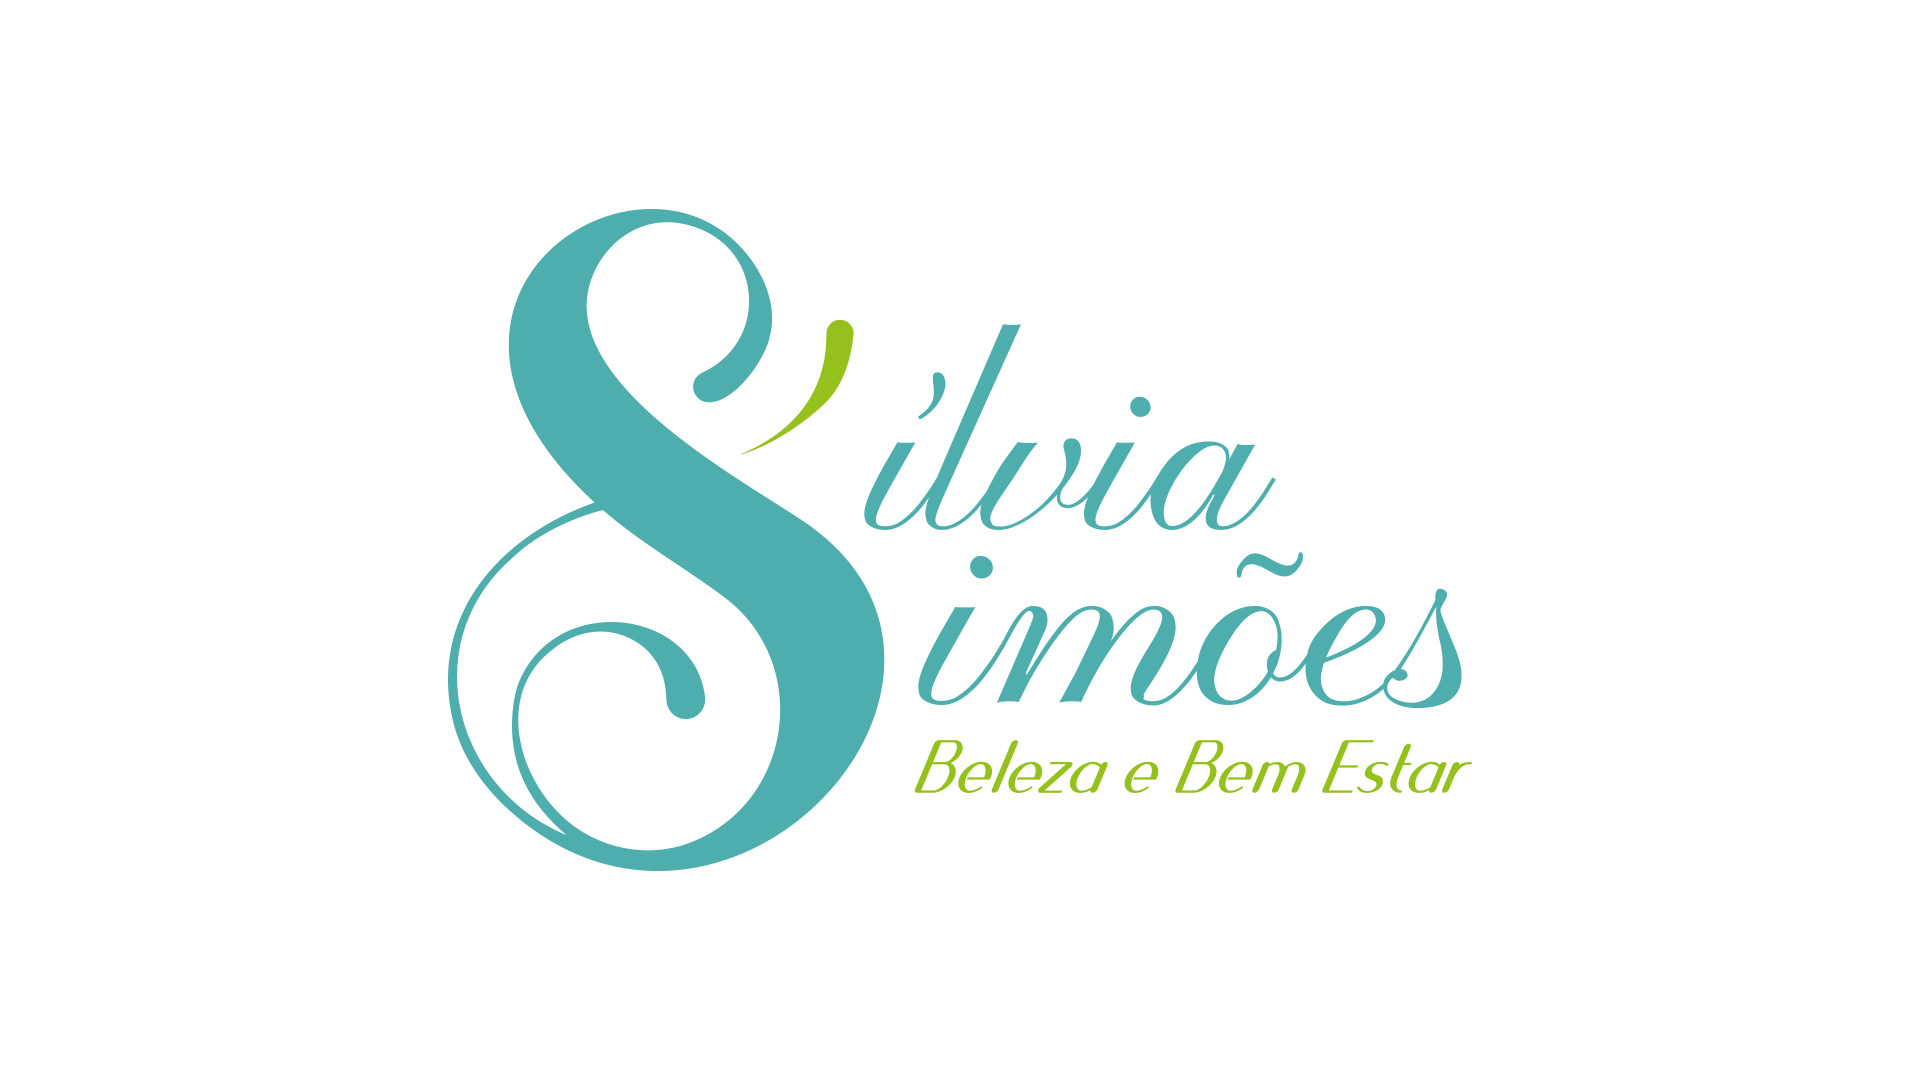 Sílvia Simões-logótipo-publicidade-design gráfico